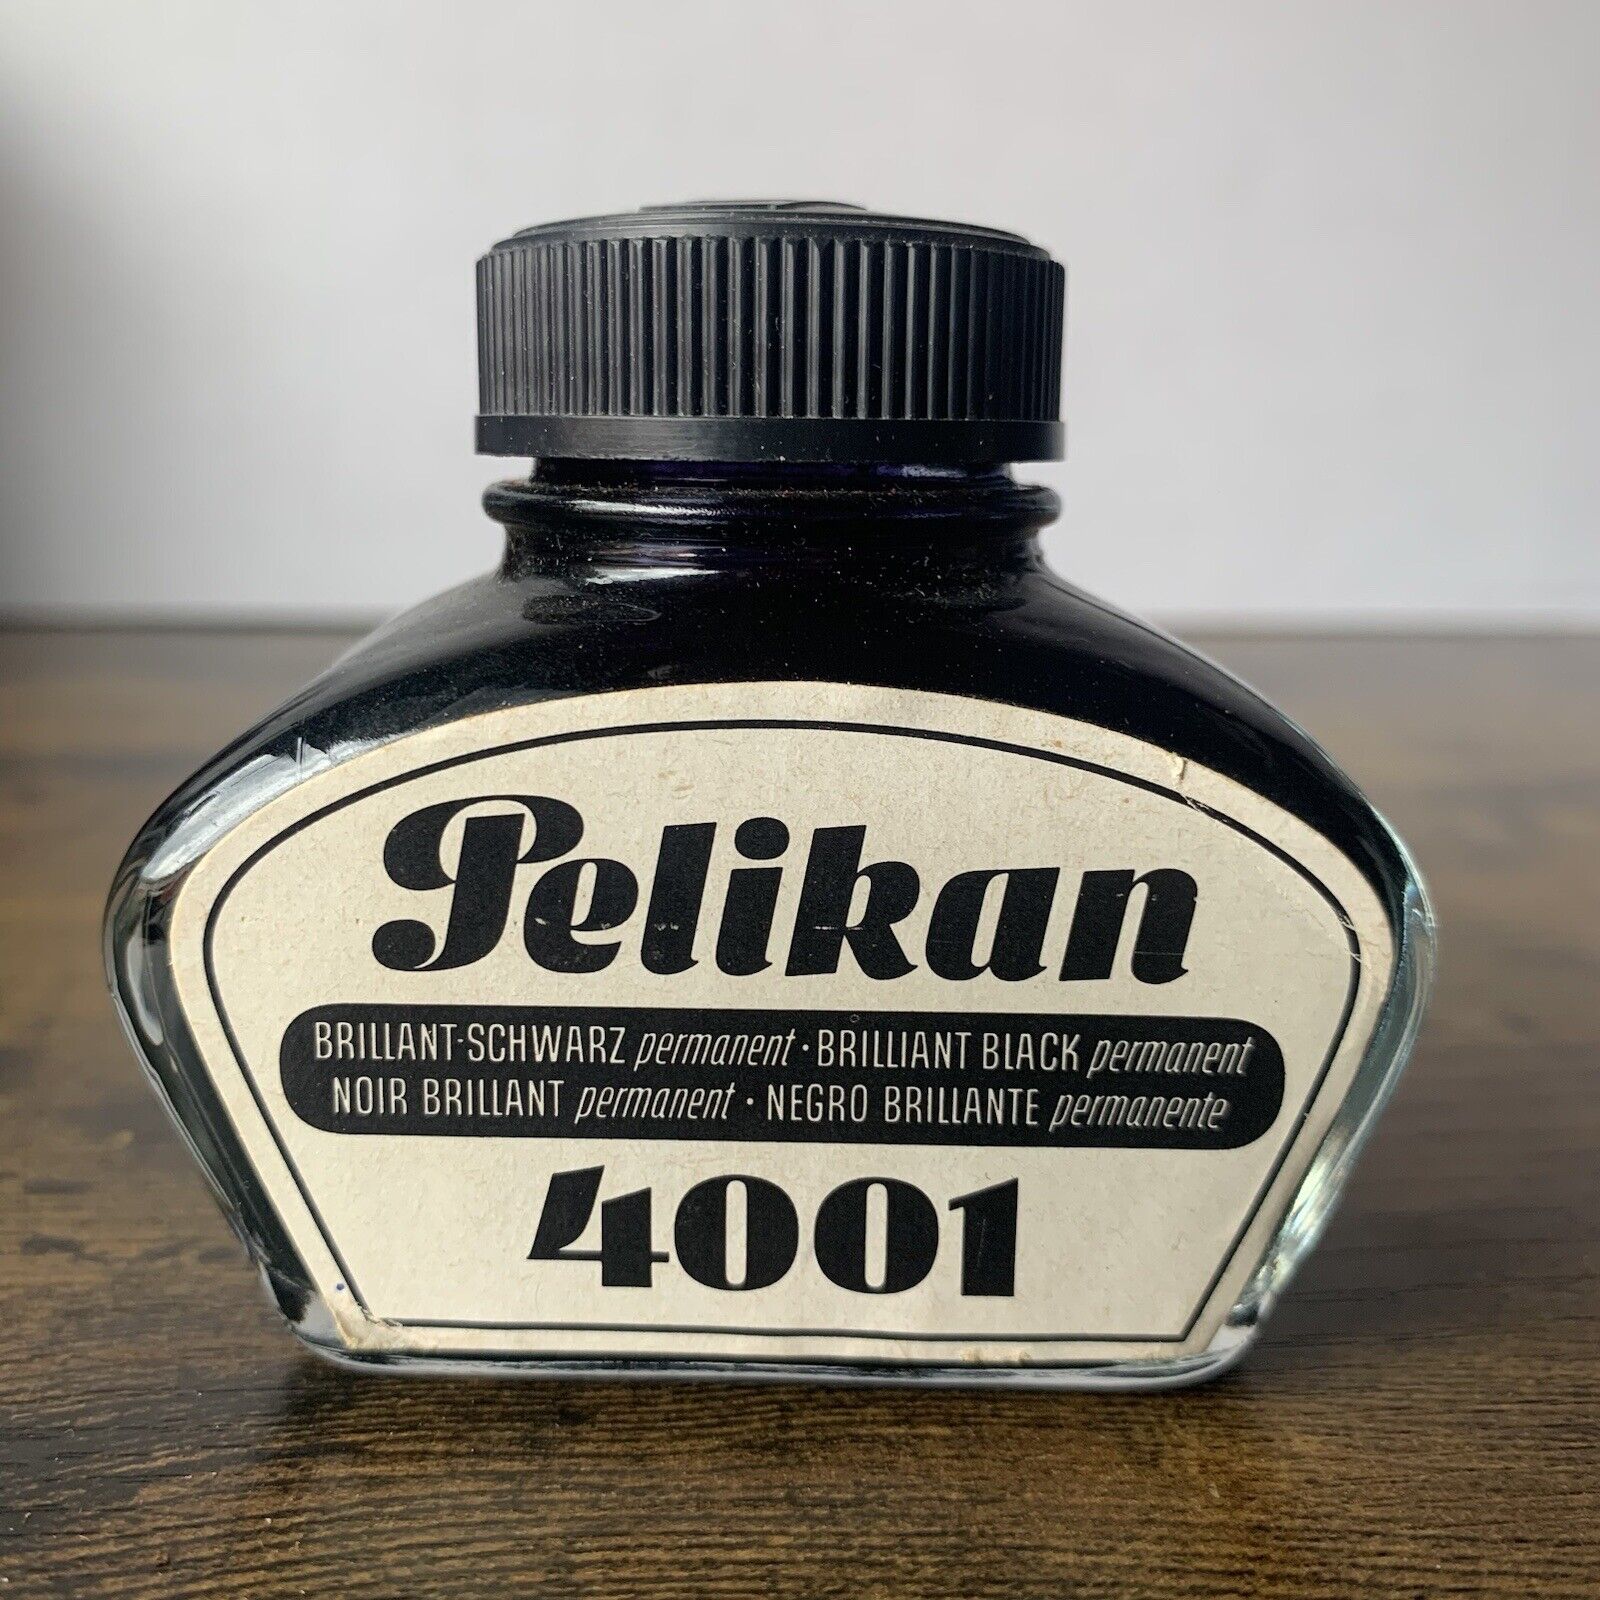 Rare Vintage Full Bottle Of Pelikan Brilliant Black 4001 Ink # 8766 West Germany